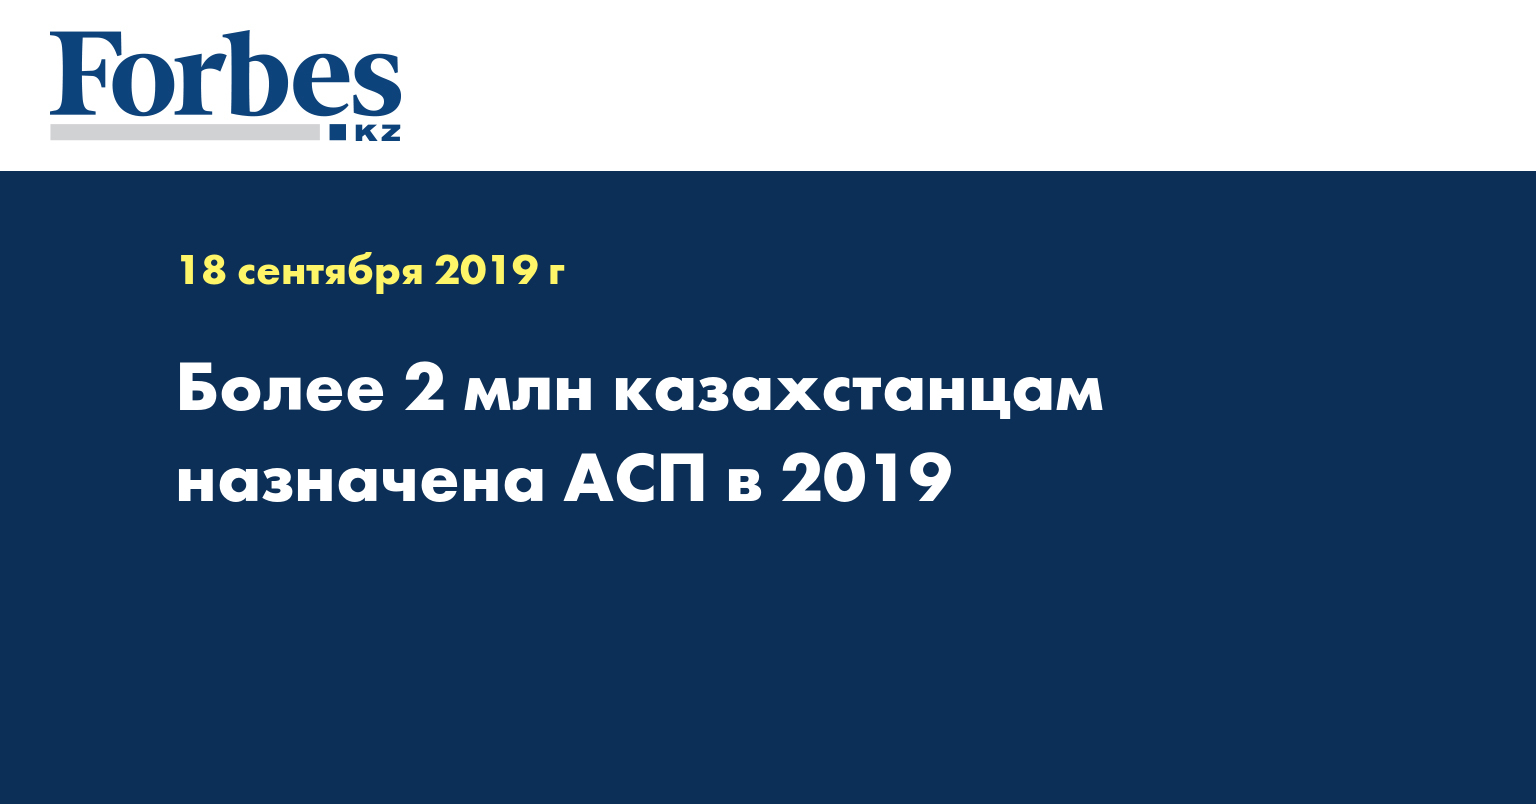  Более 2 млн казахстанцам назначена АСП в 2019